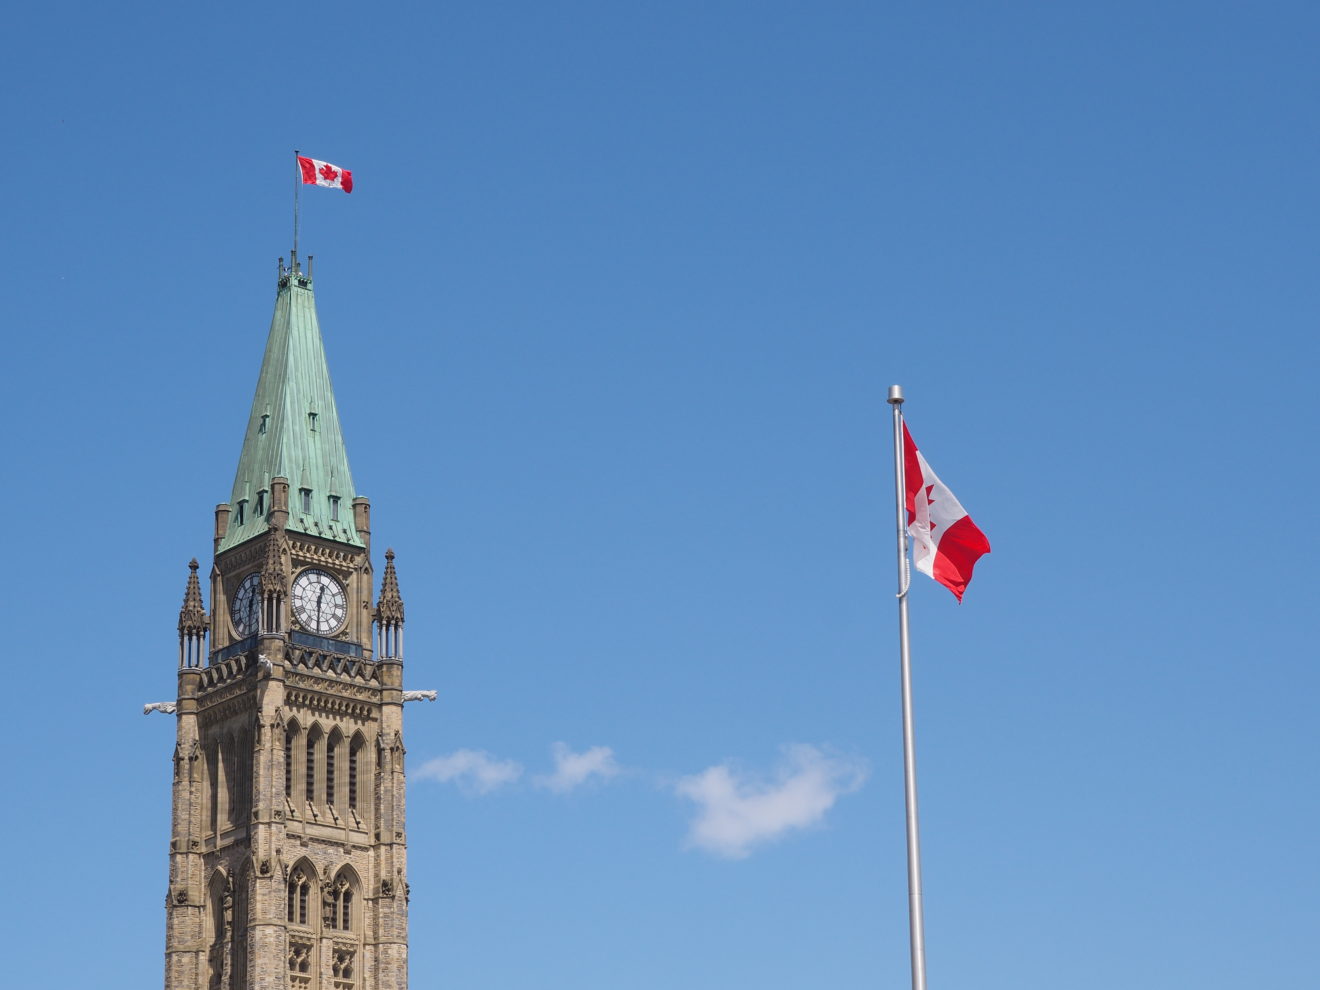 Ottawa parliament and Canadian flag